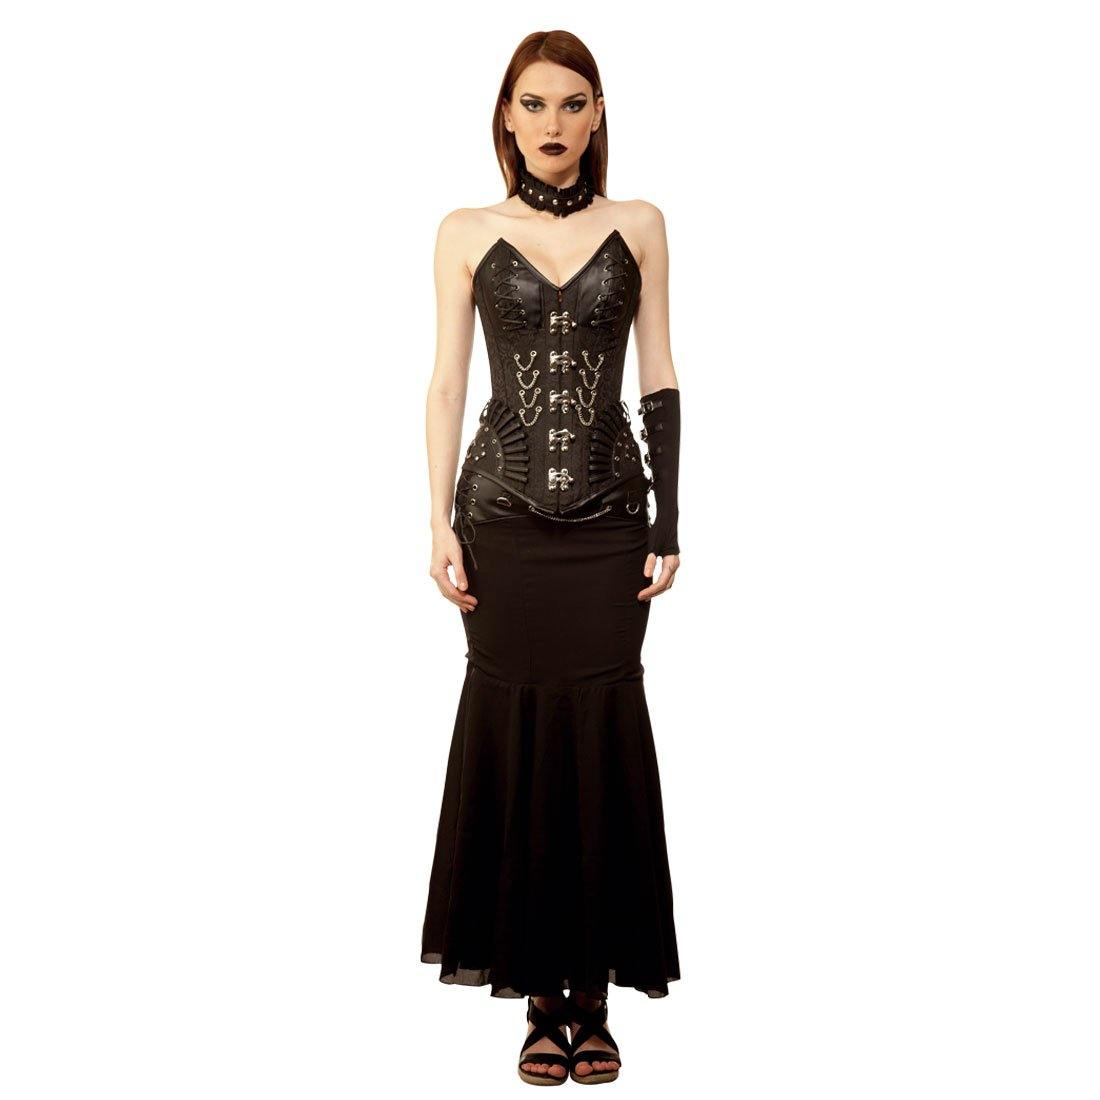 Vasyklo Gothic Authentic Steel Boned Long Lined Overbust Corset Dress - Corset Revolution